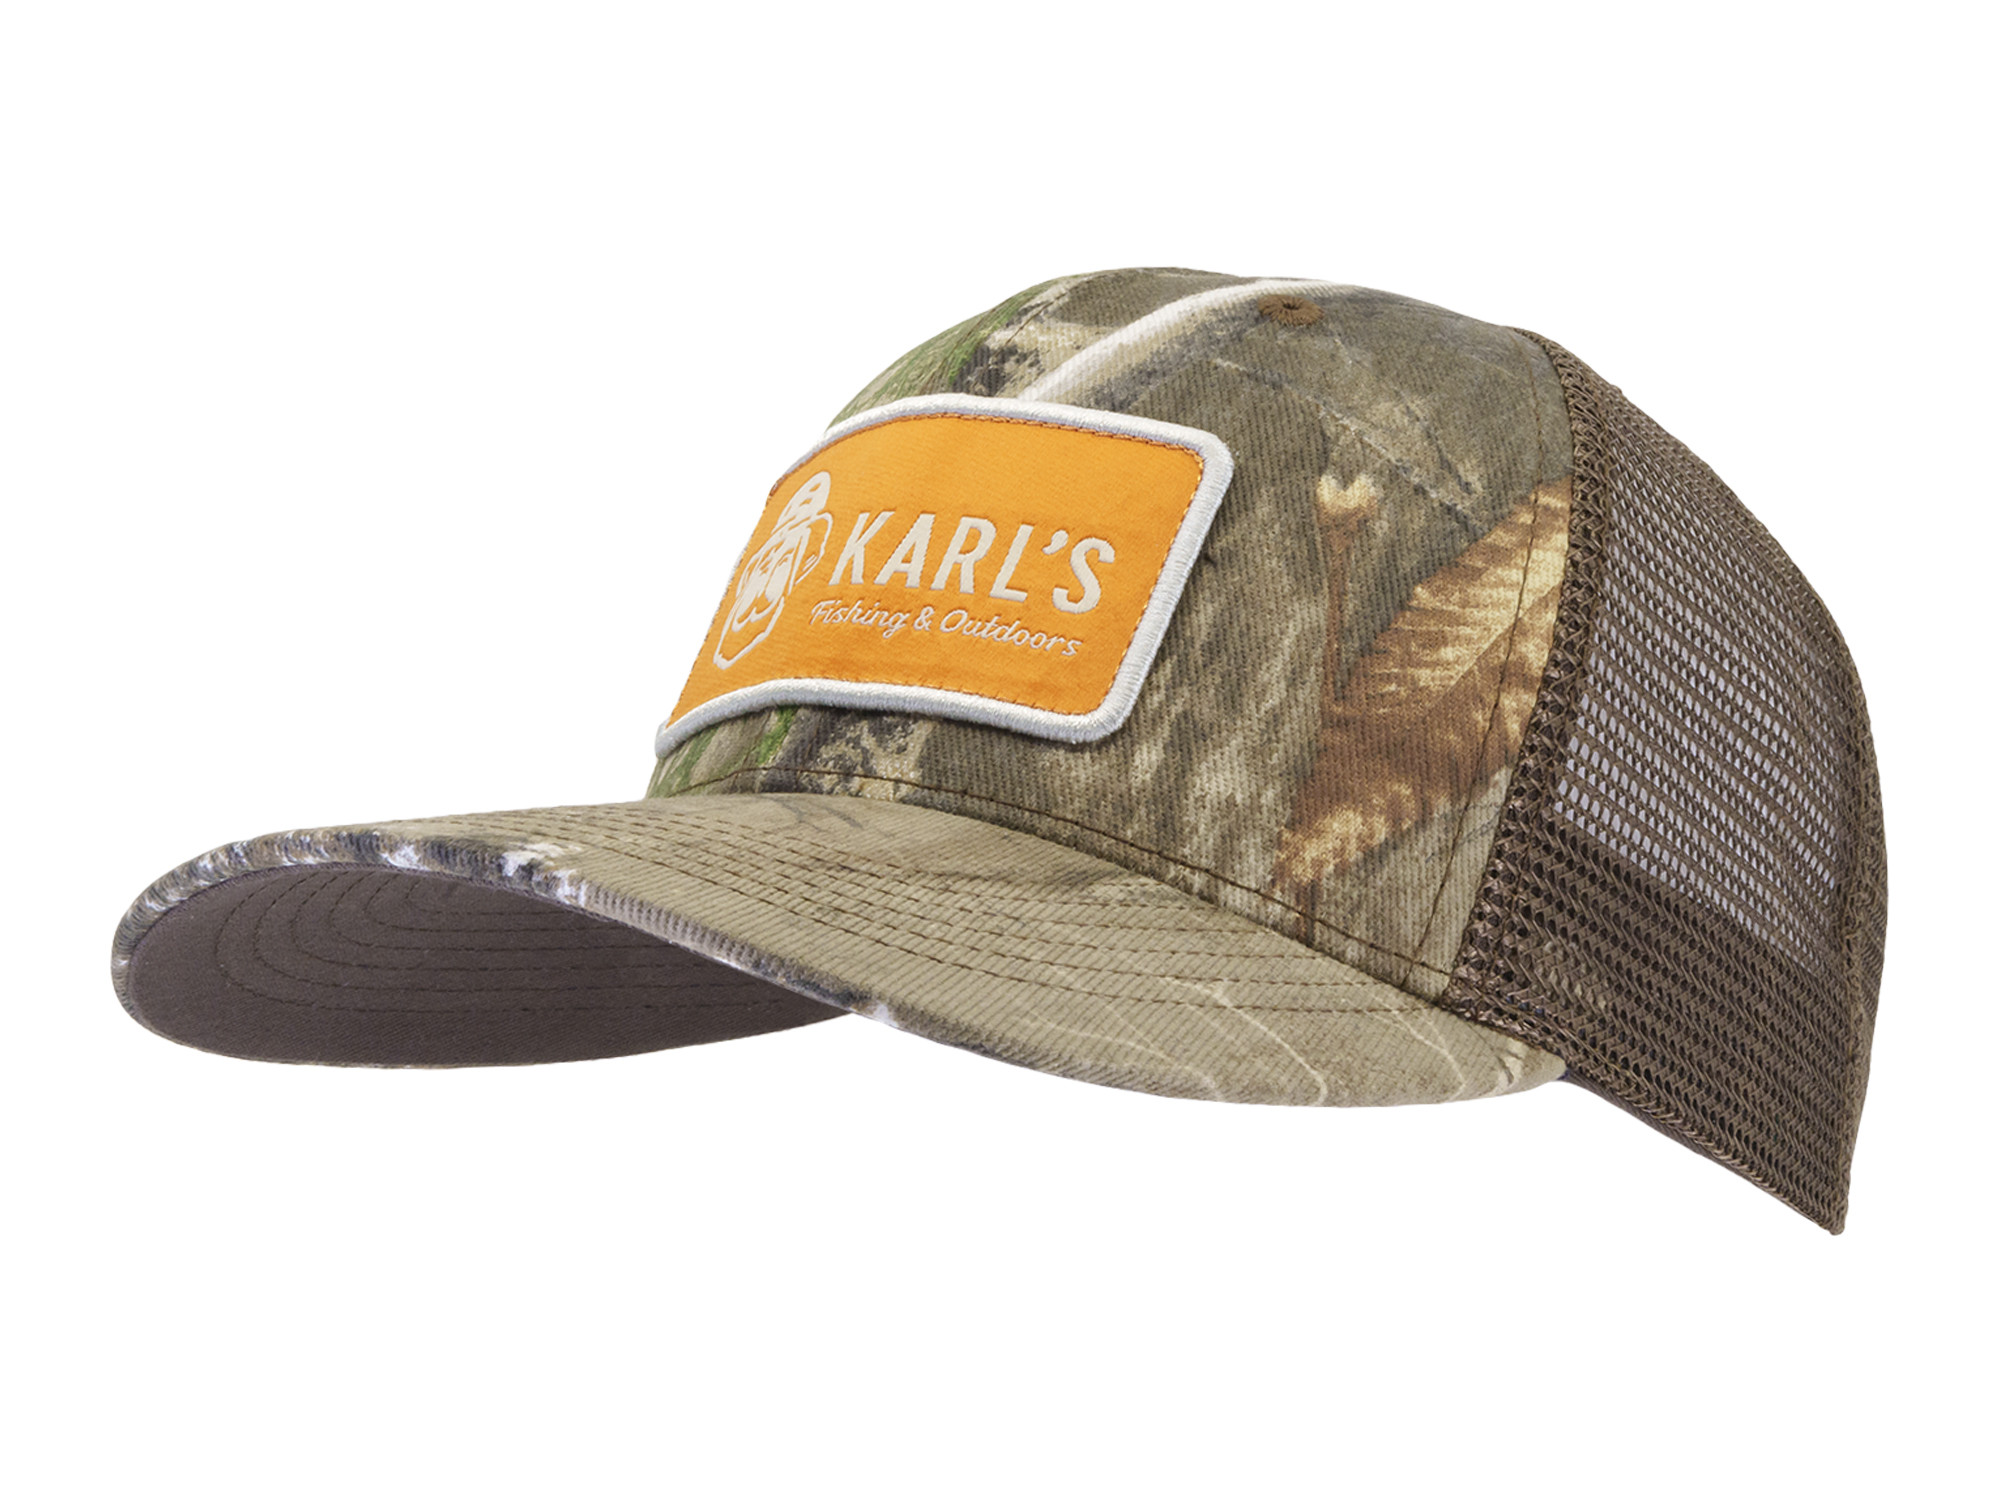 Karl's Fishing & Outdoors Camo Snapback Hat